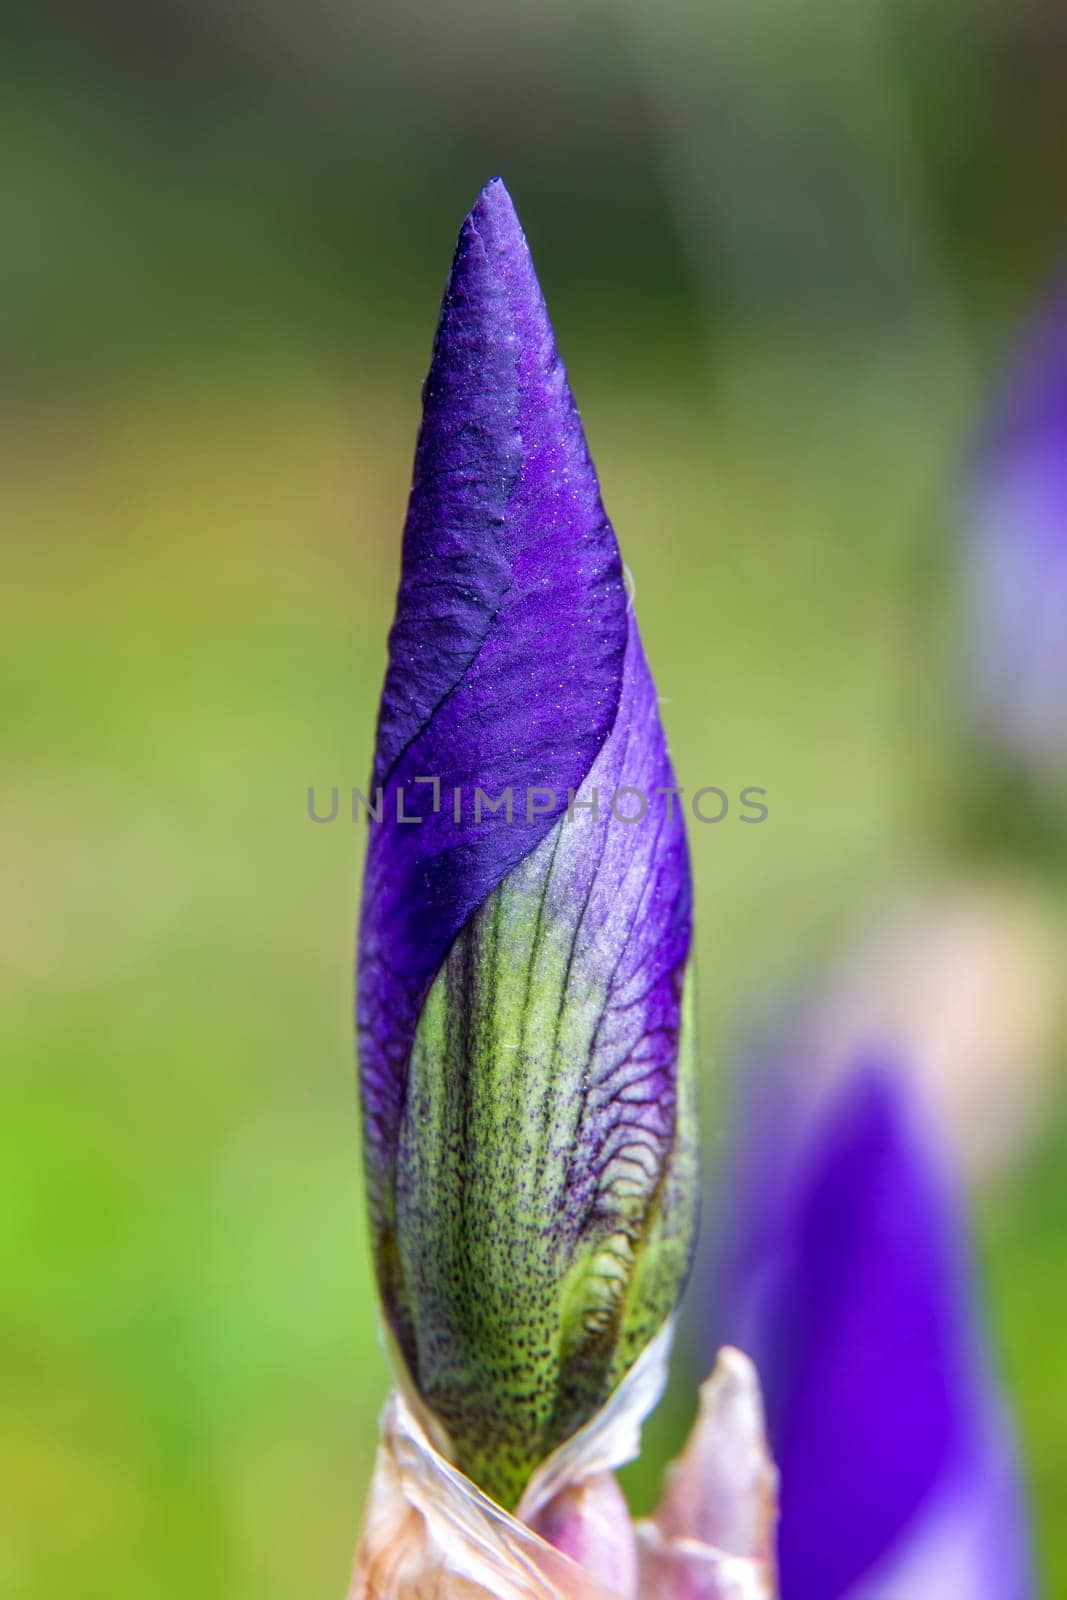 close up of a Beautiful Iris flower bud. Vertical view